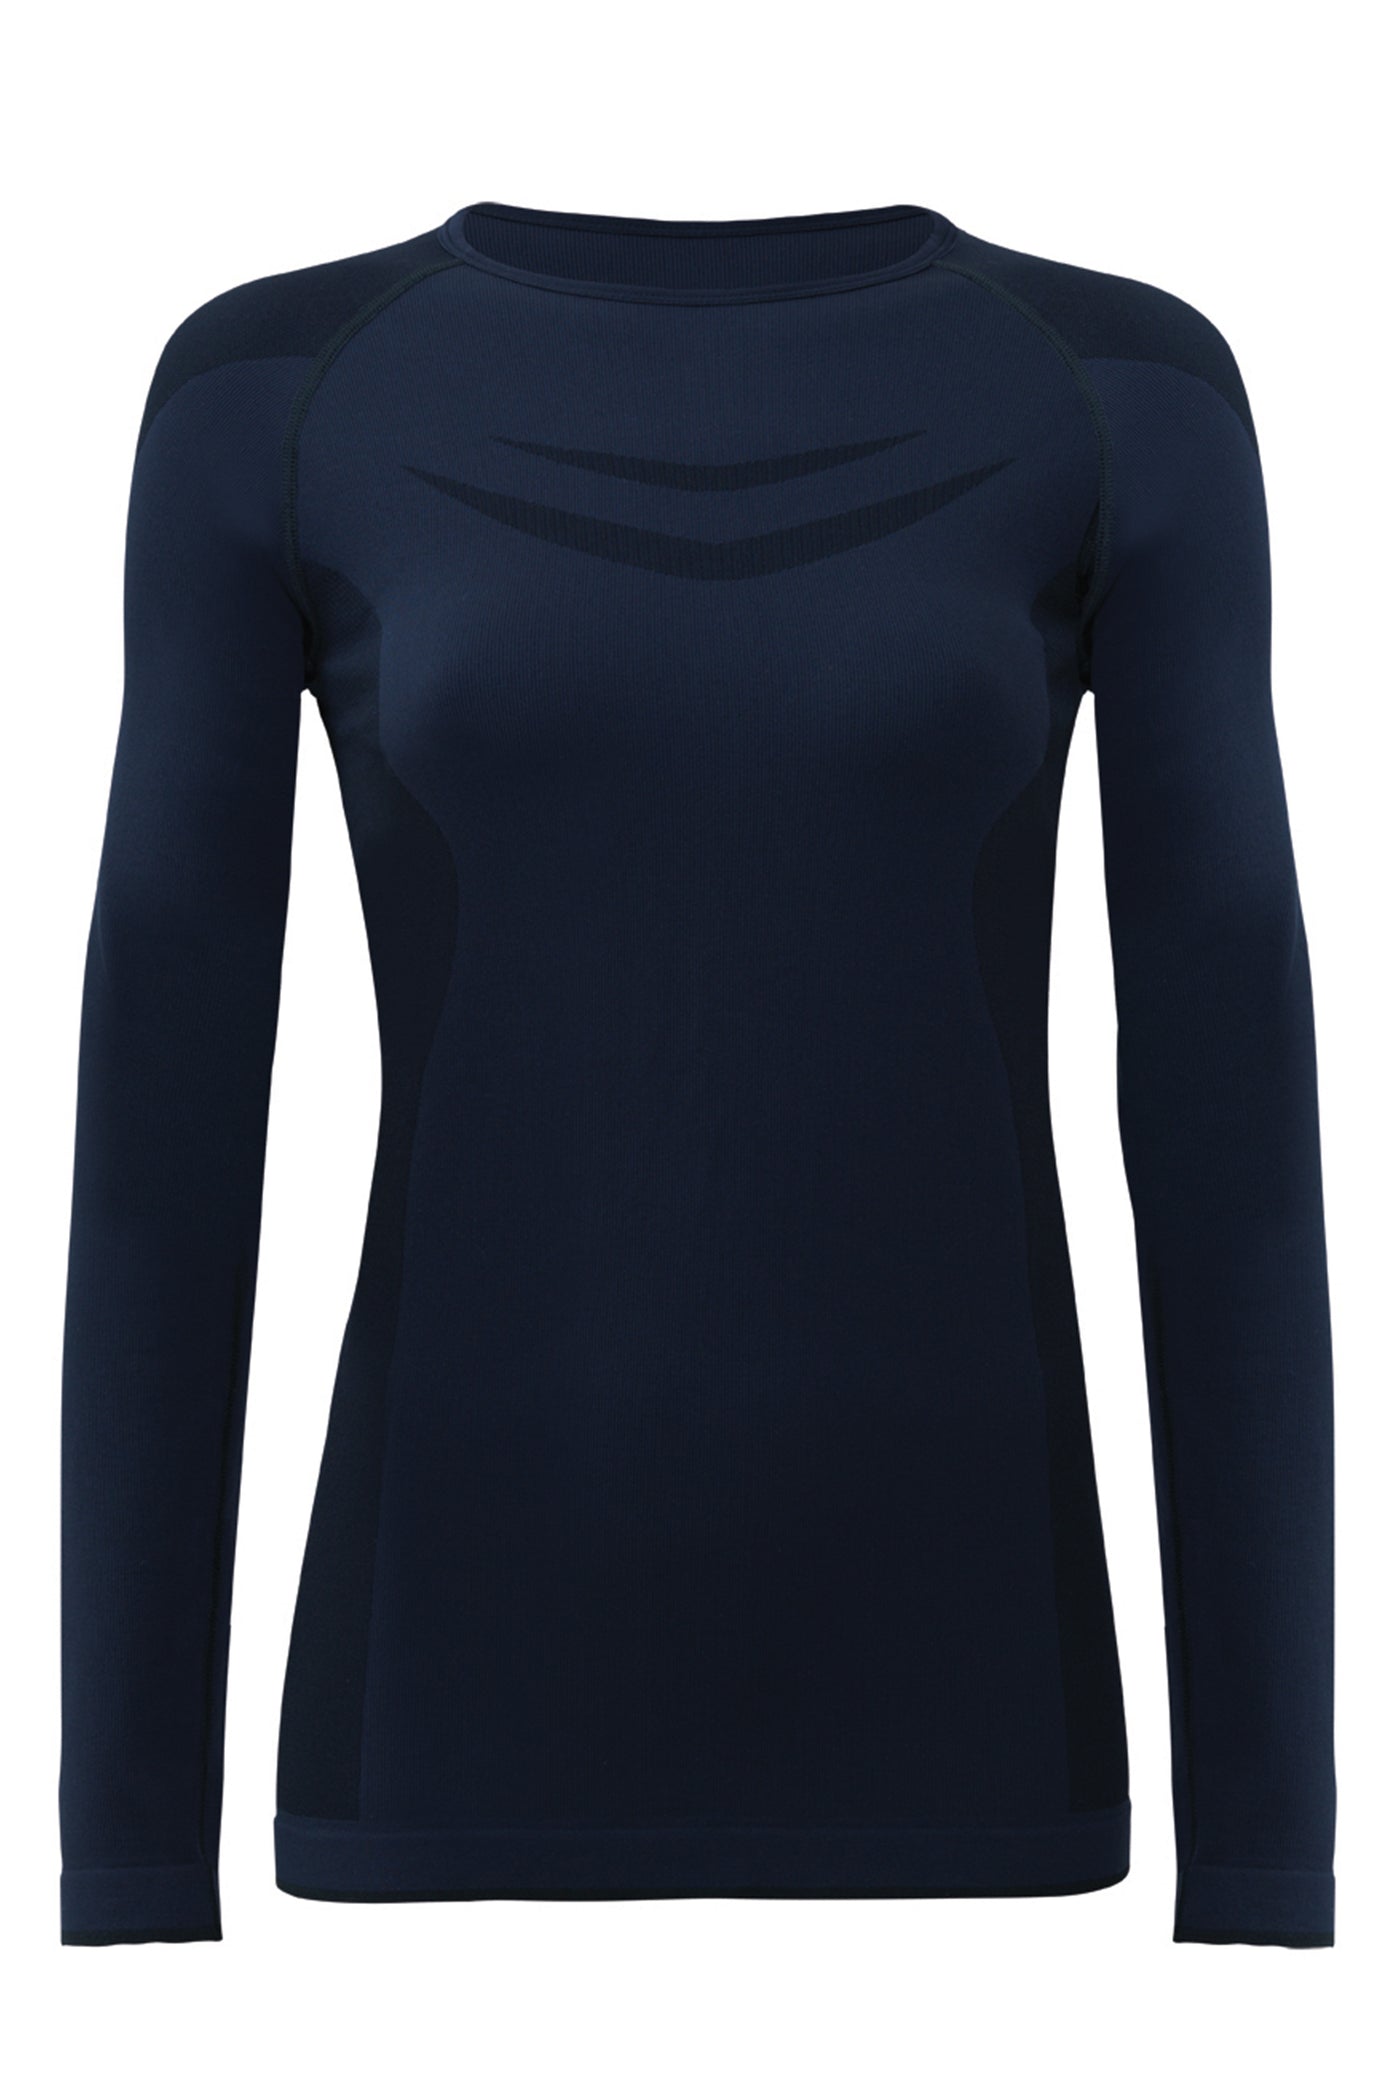 blackspade-Ladies' thermal seamless long sleeve t-shirt-9571, level-2-underwear-black